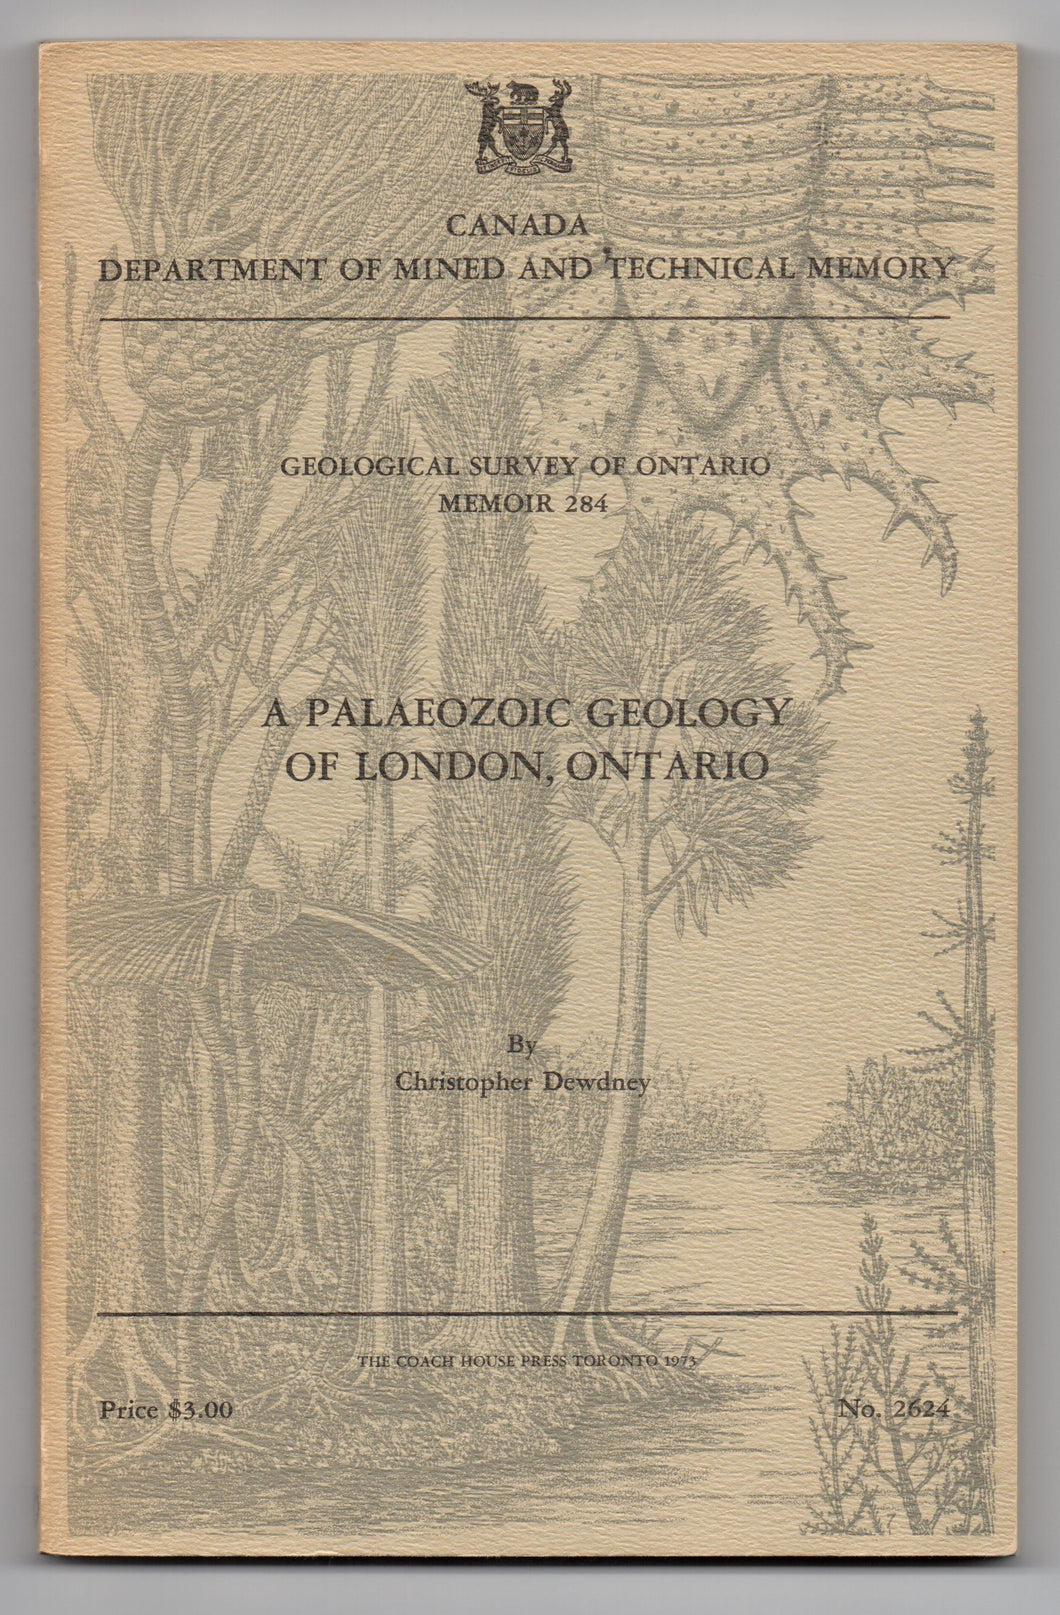 A Palaeozoic Geology of London, Ontario